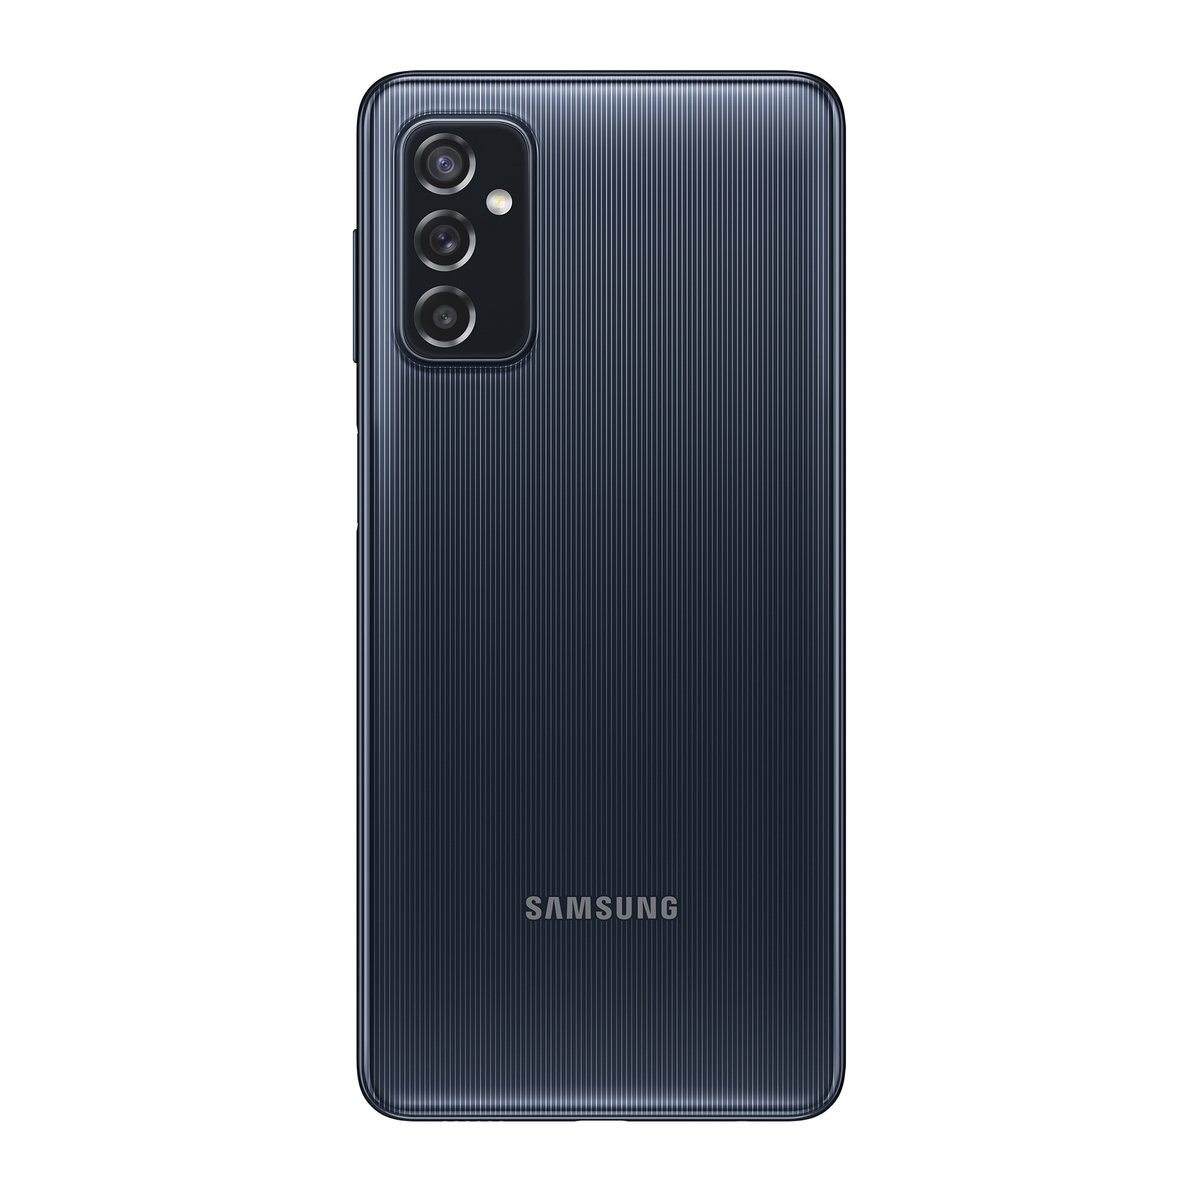 Samsung Galaxy M52,5G Dual SIM Smartphone, 128GB Storage and 8GB RAM, Black